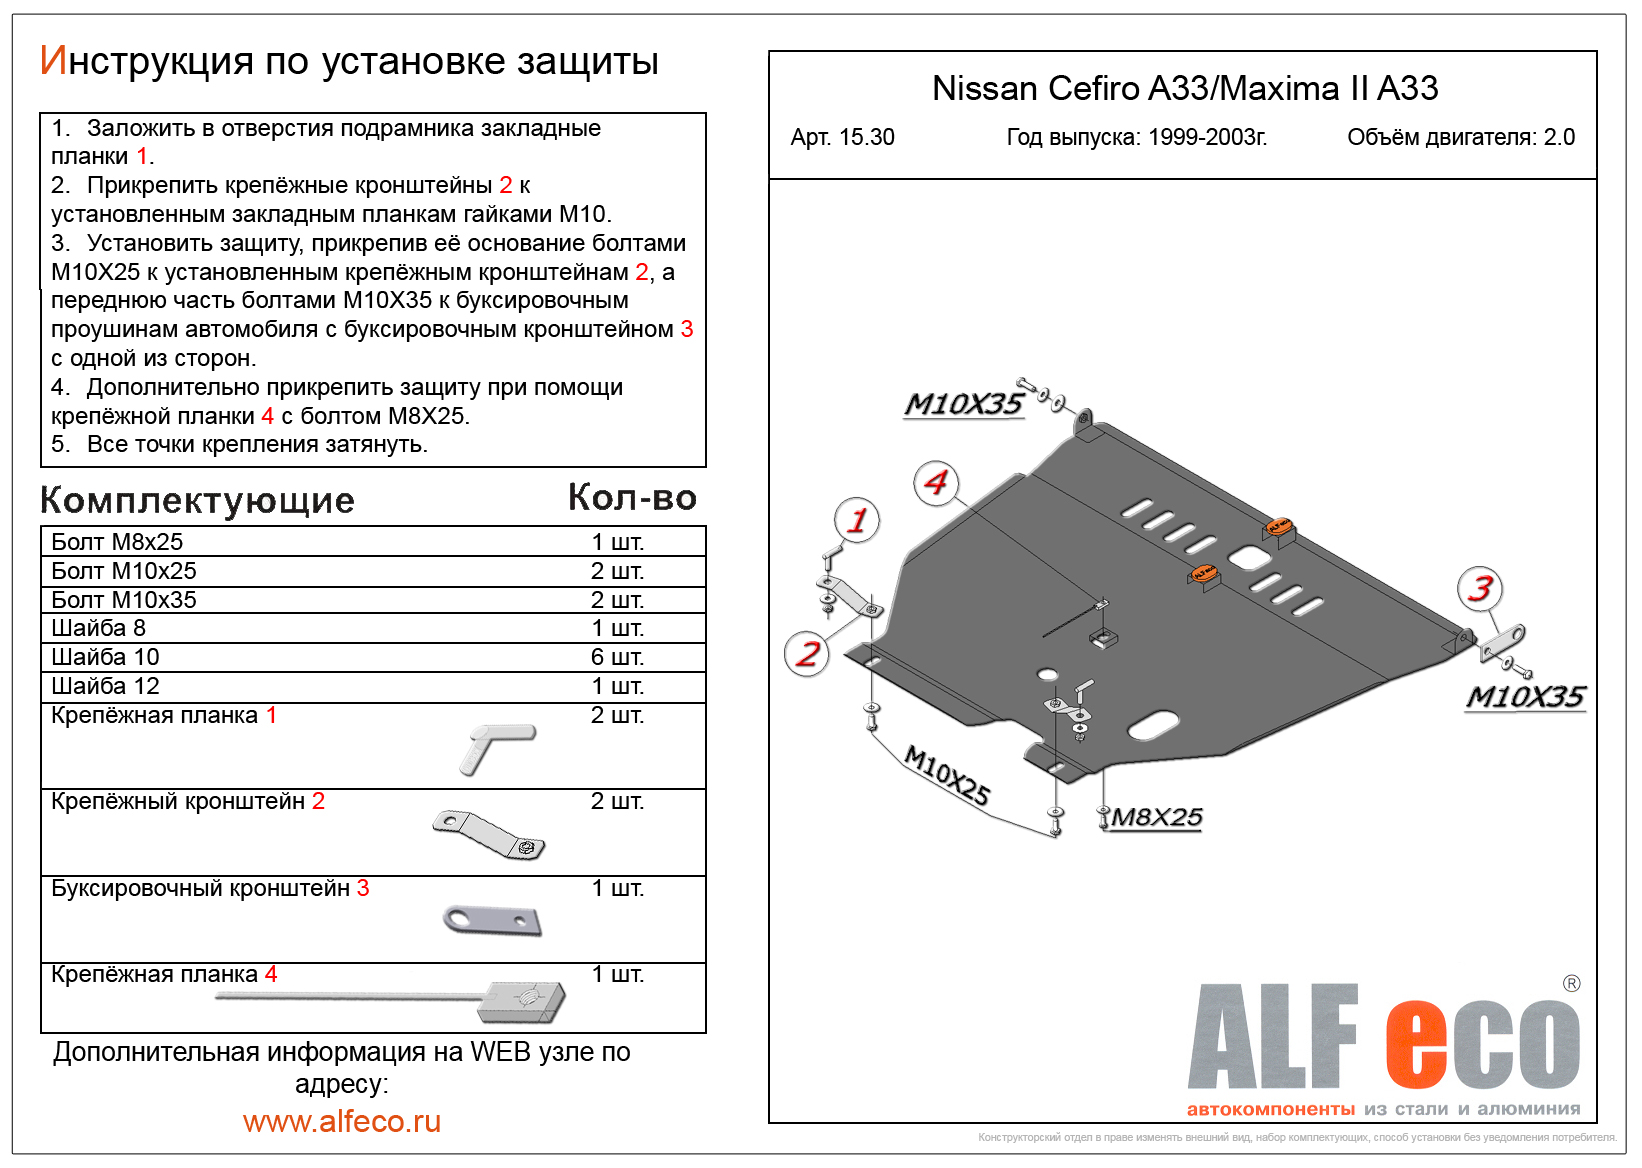 ,    Nissan Cefiro A33/Maxima II A33 1999 - 2003
                